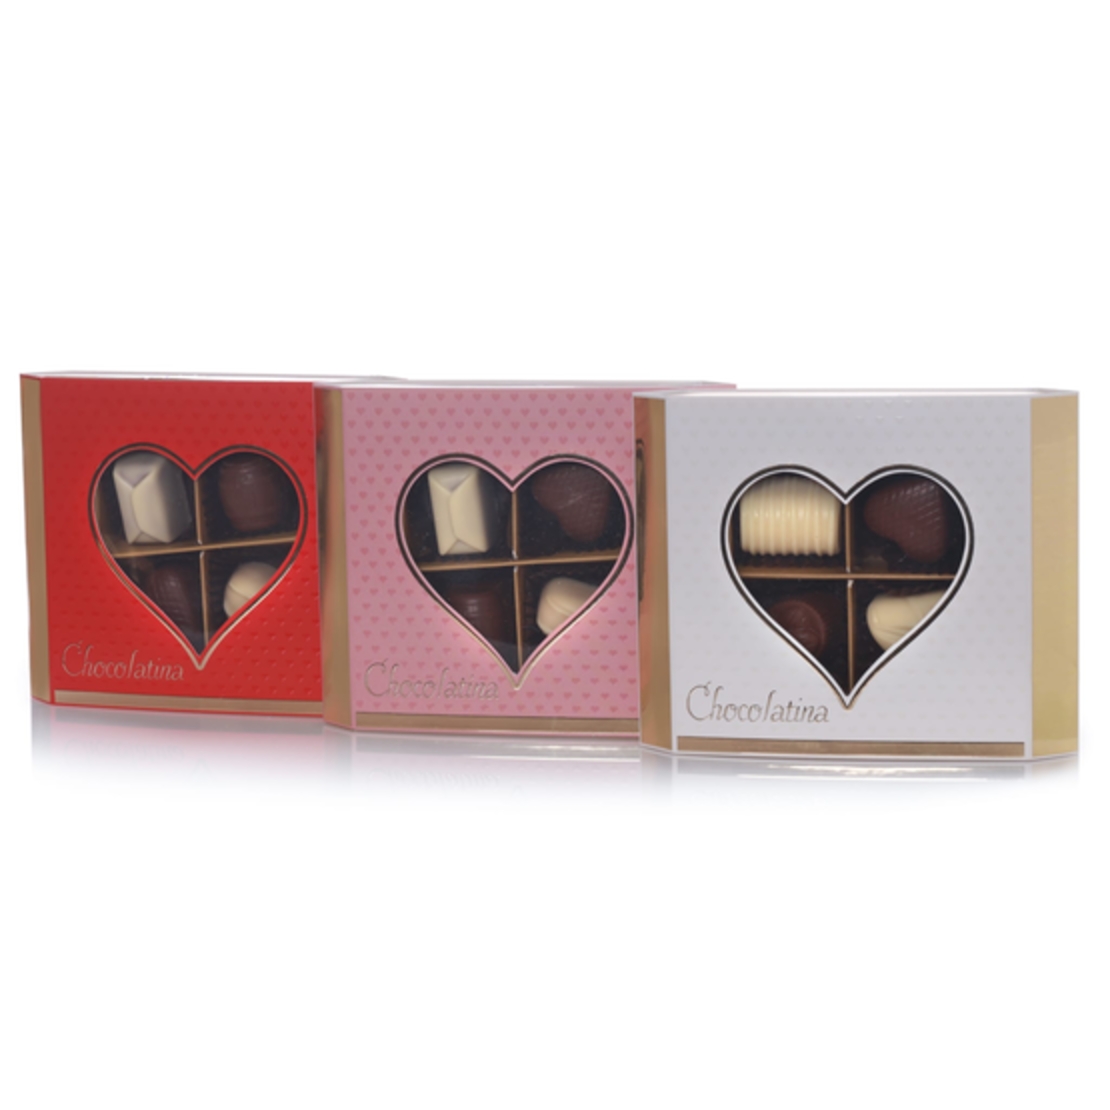 Chocolatina - luxurious box of 4 pralines | BADATZ